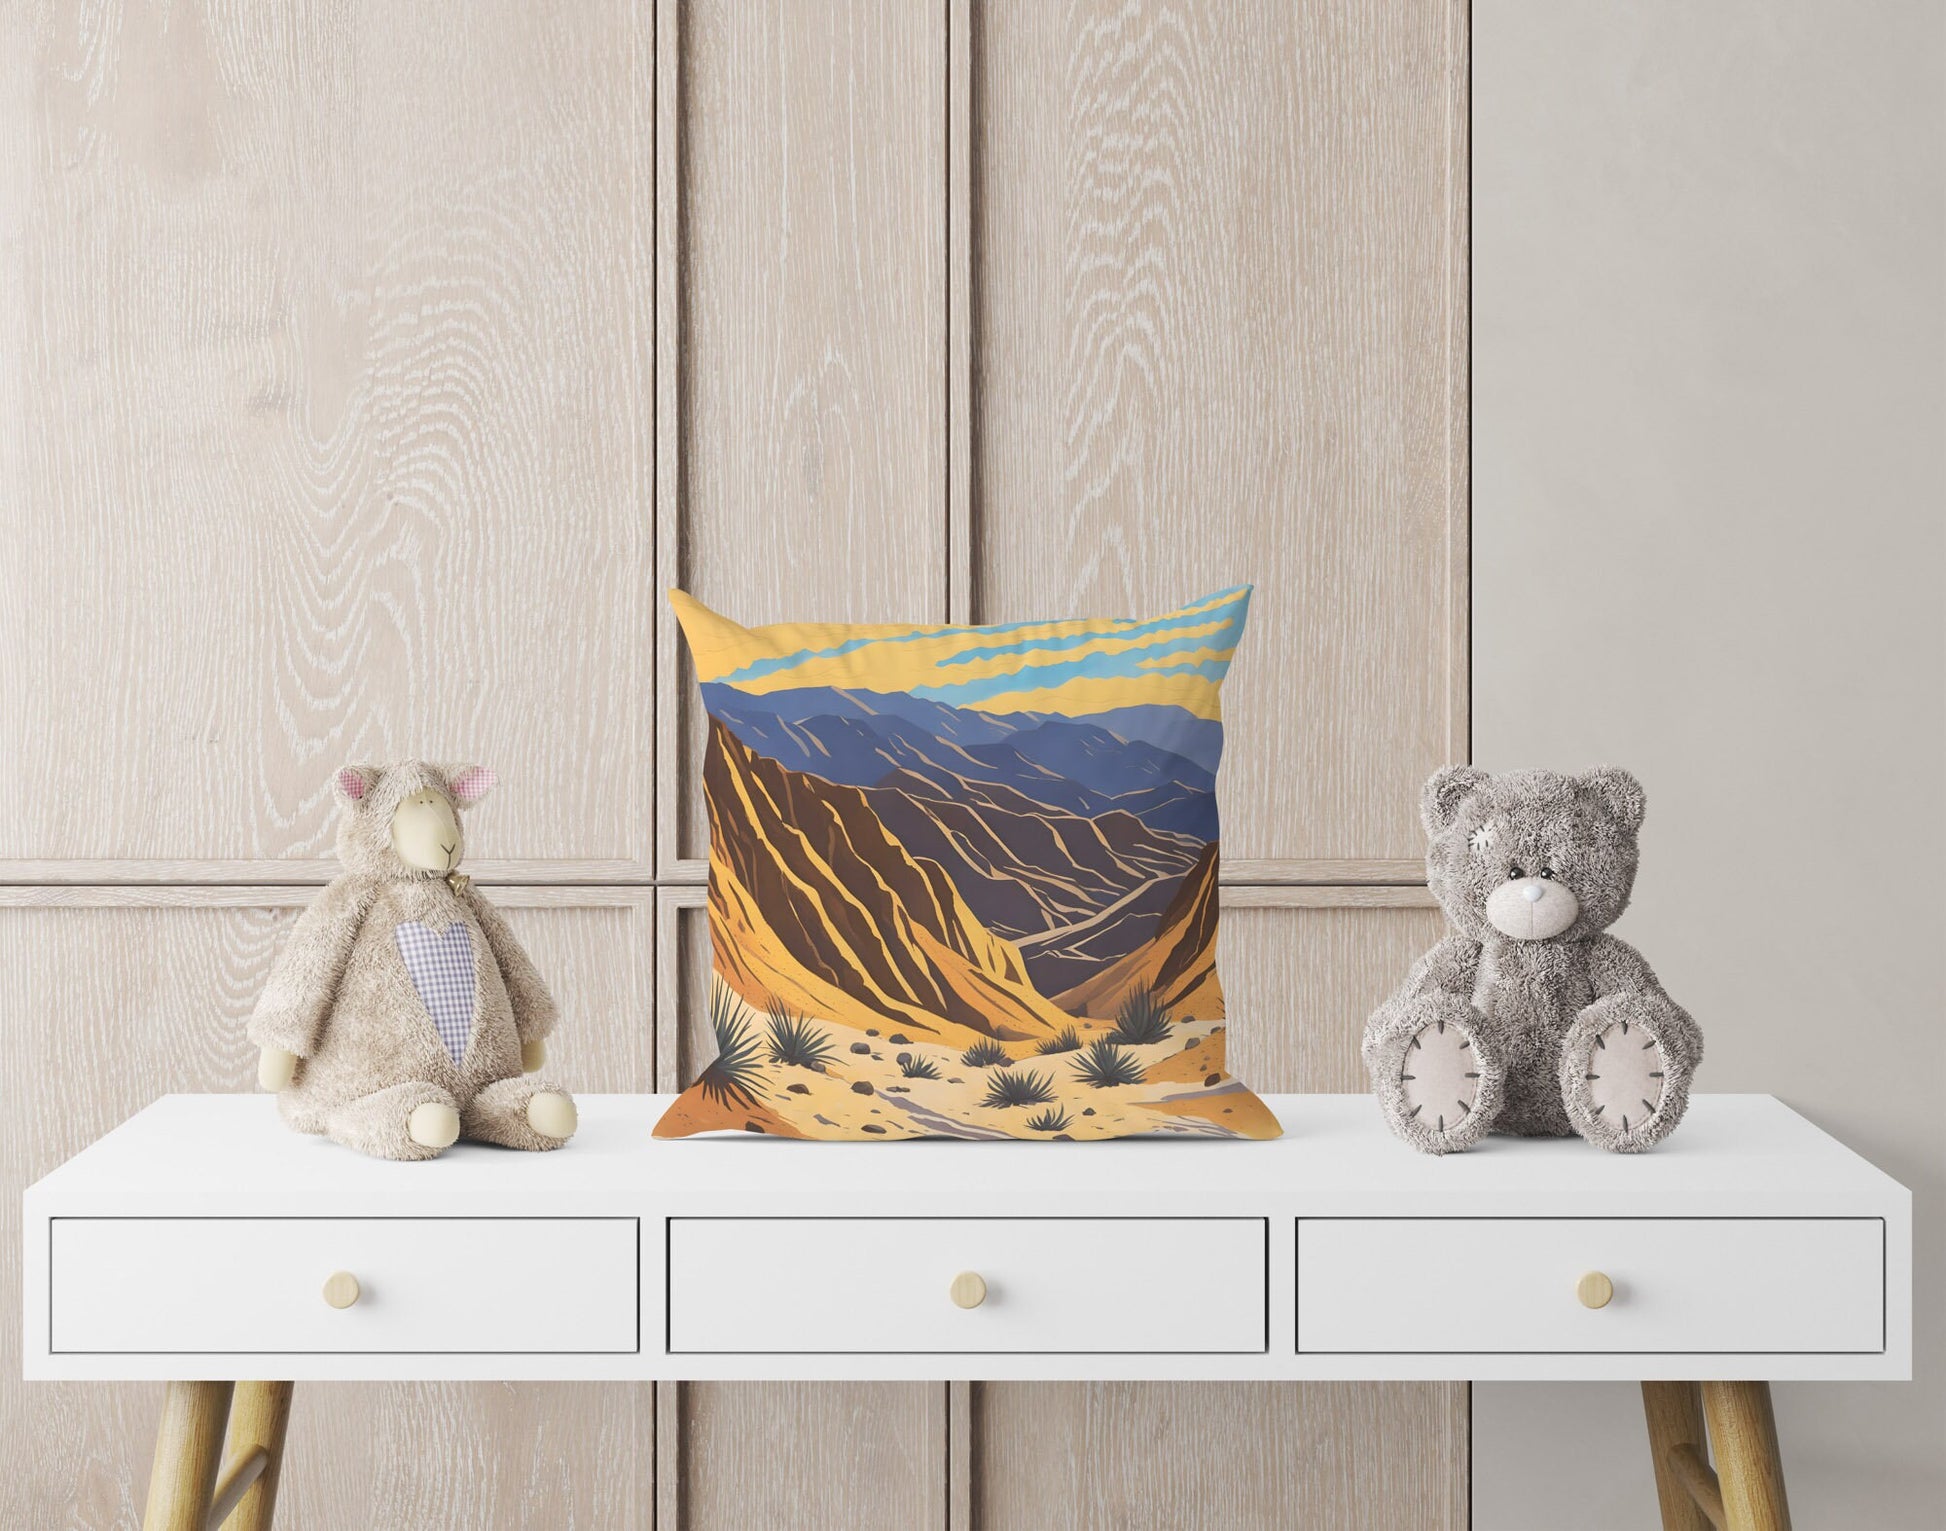 Golden Canyon In Death Valley National Park, California Tapestry Pillows, Usa Travel Pillow, Artist Pillow, Contemporary Pillow